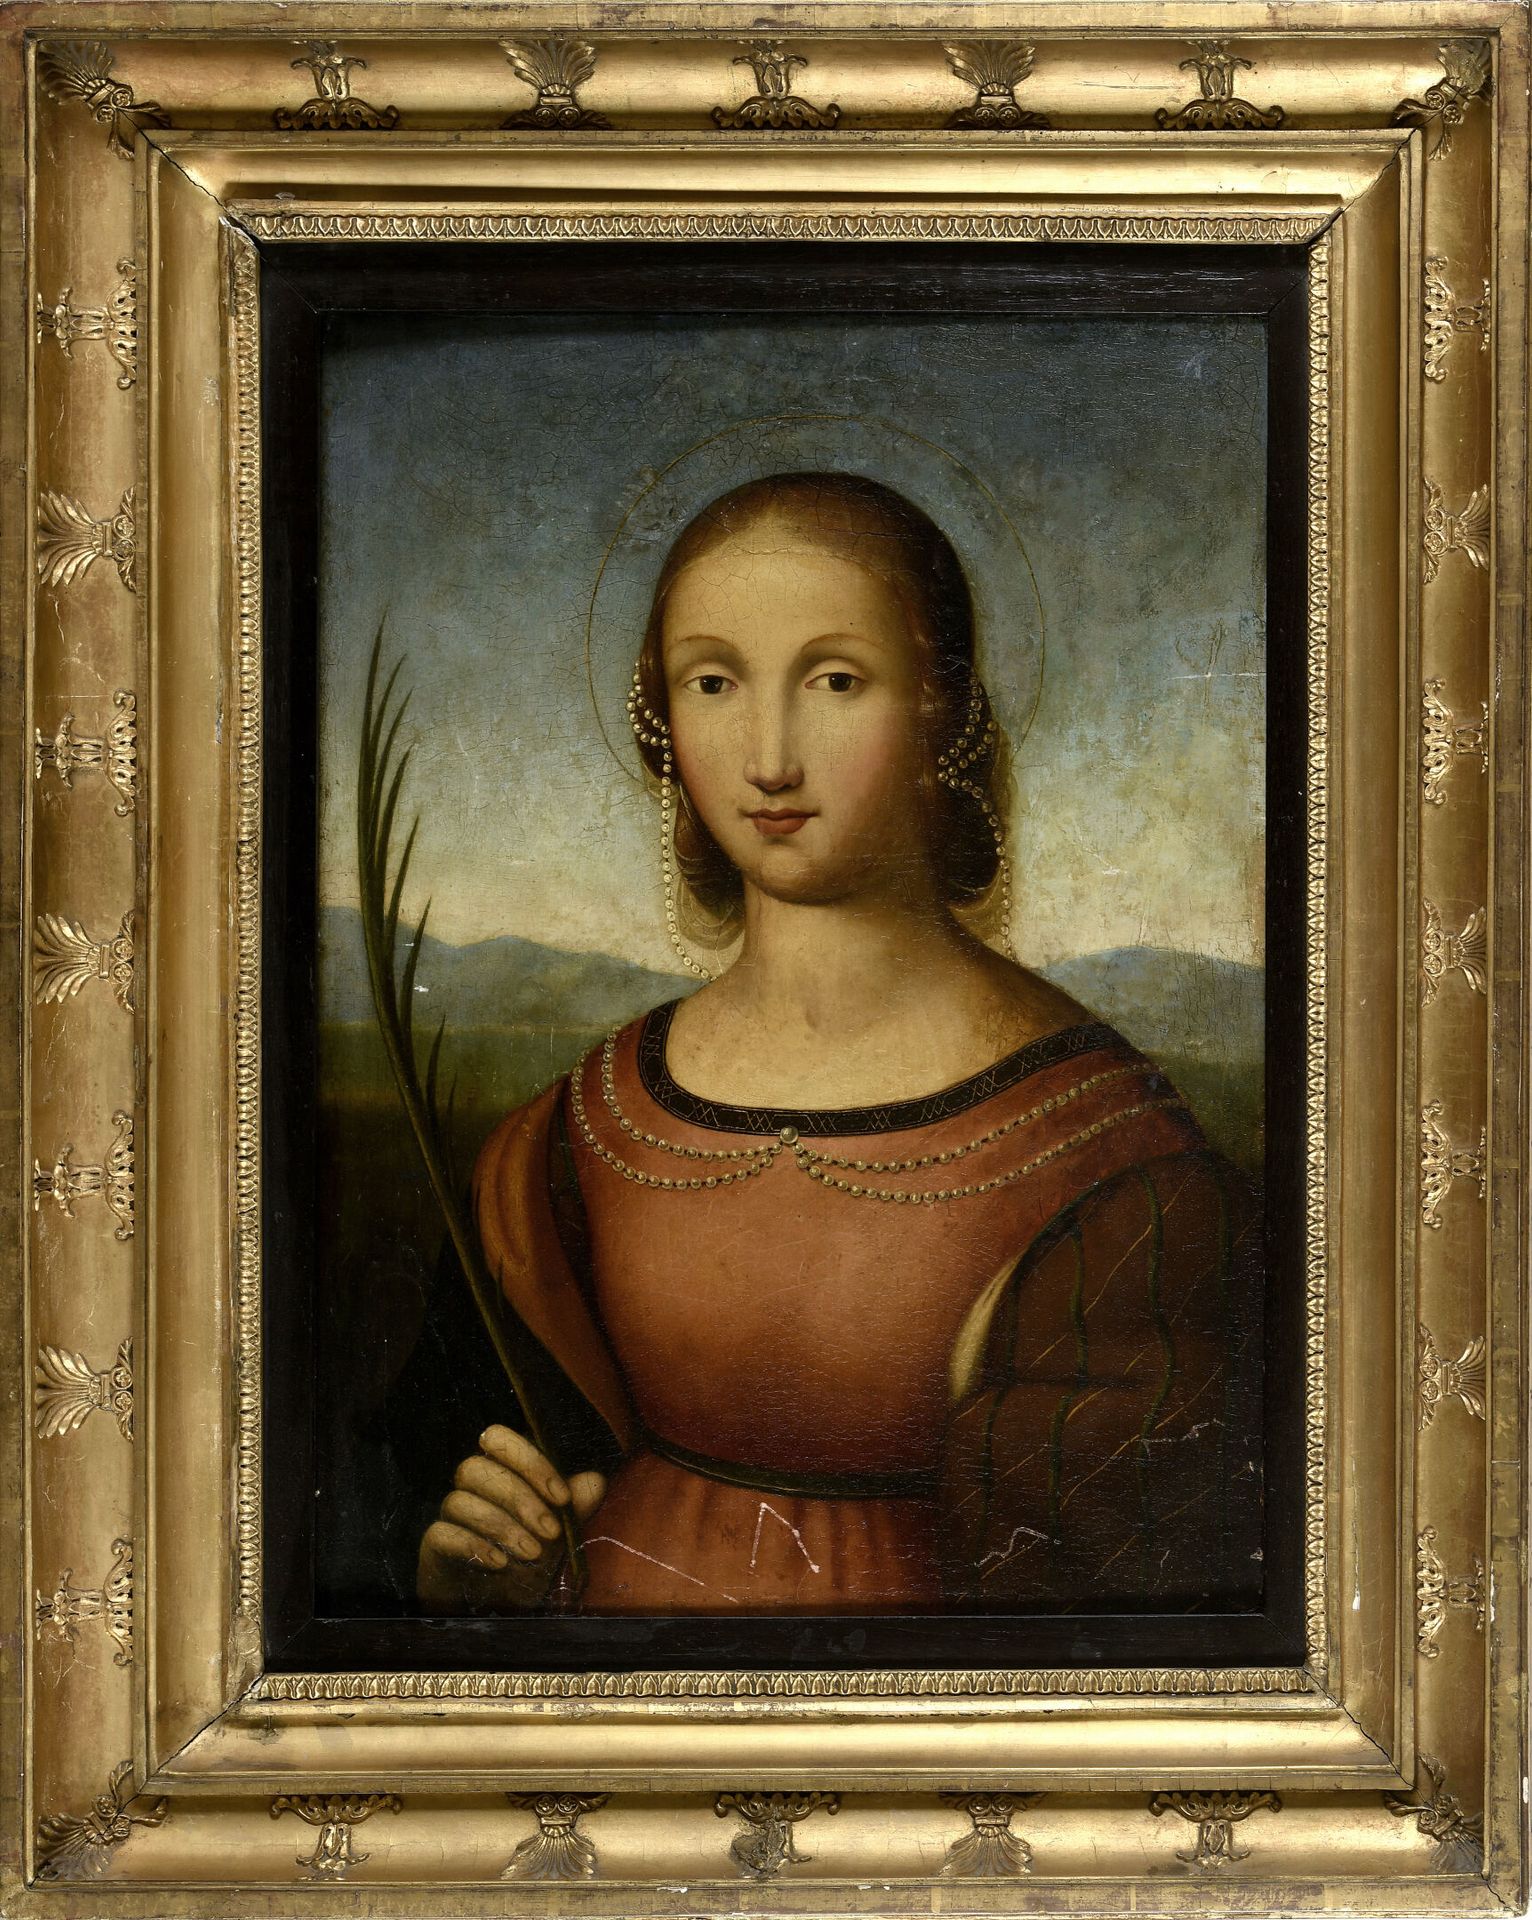 Null 拉斐尔风格 
手持殉道者手掌的女士肖像
白杨木板，带两个横板 
H.56 厘米 - 44 厘米 ET
旧修复